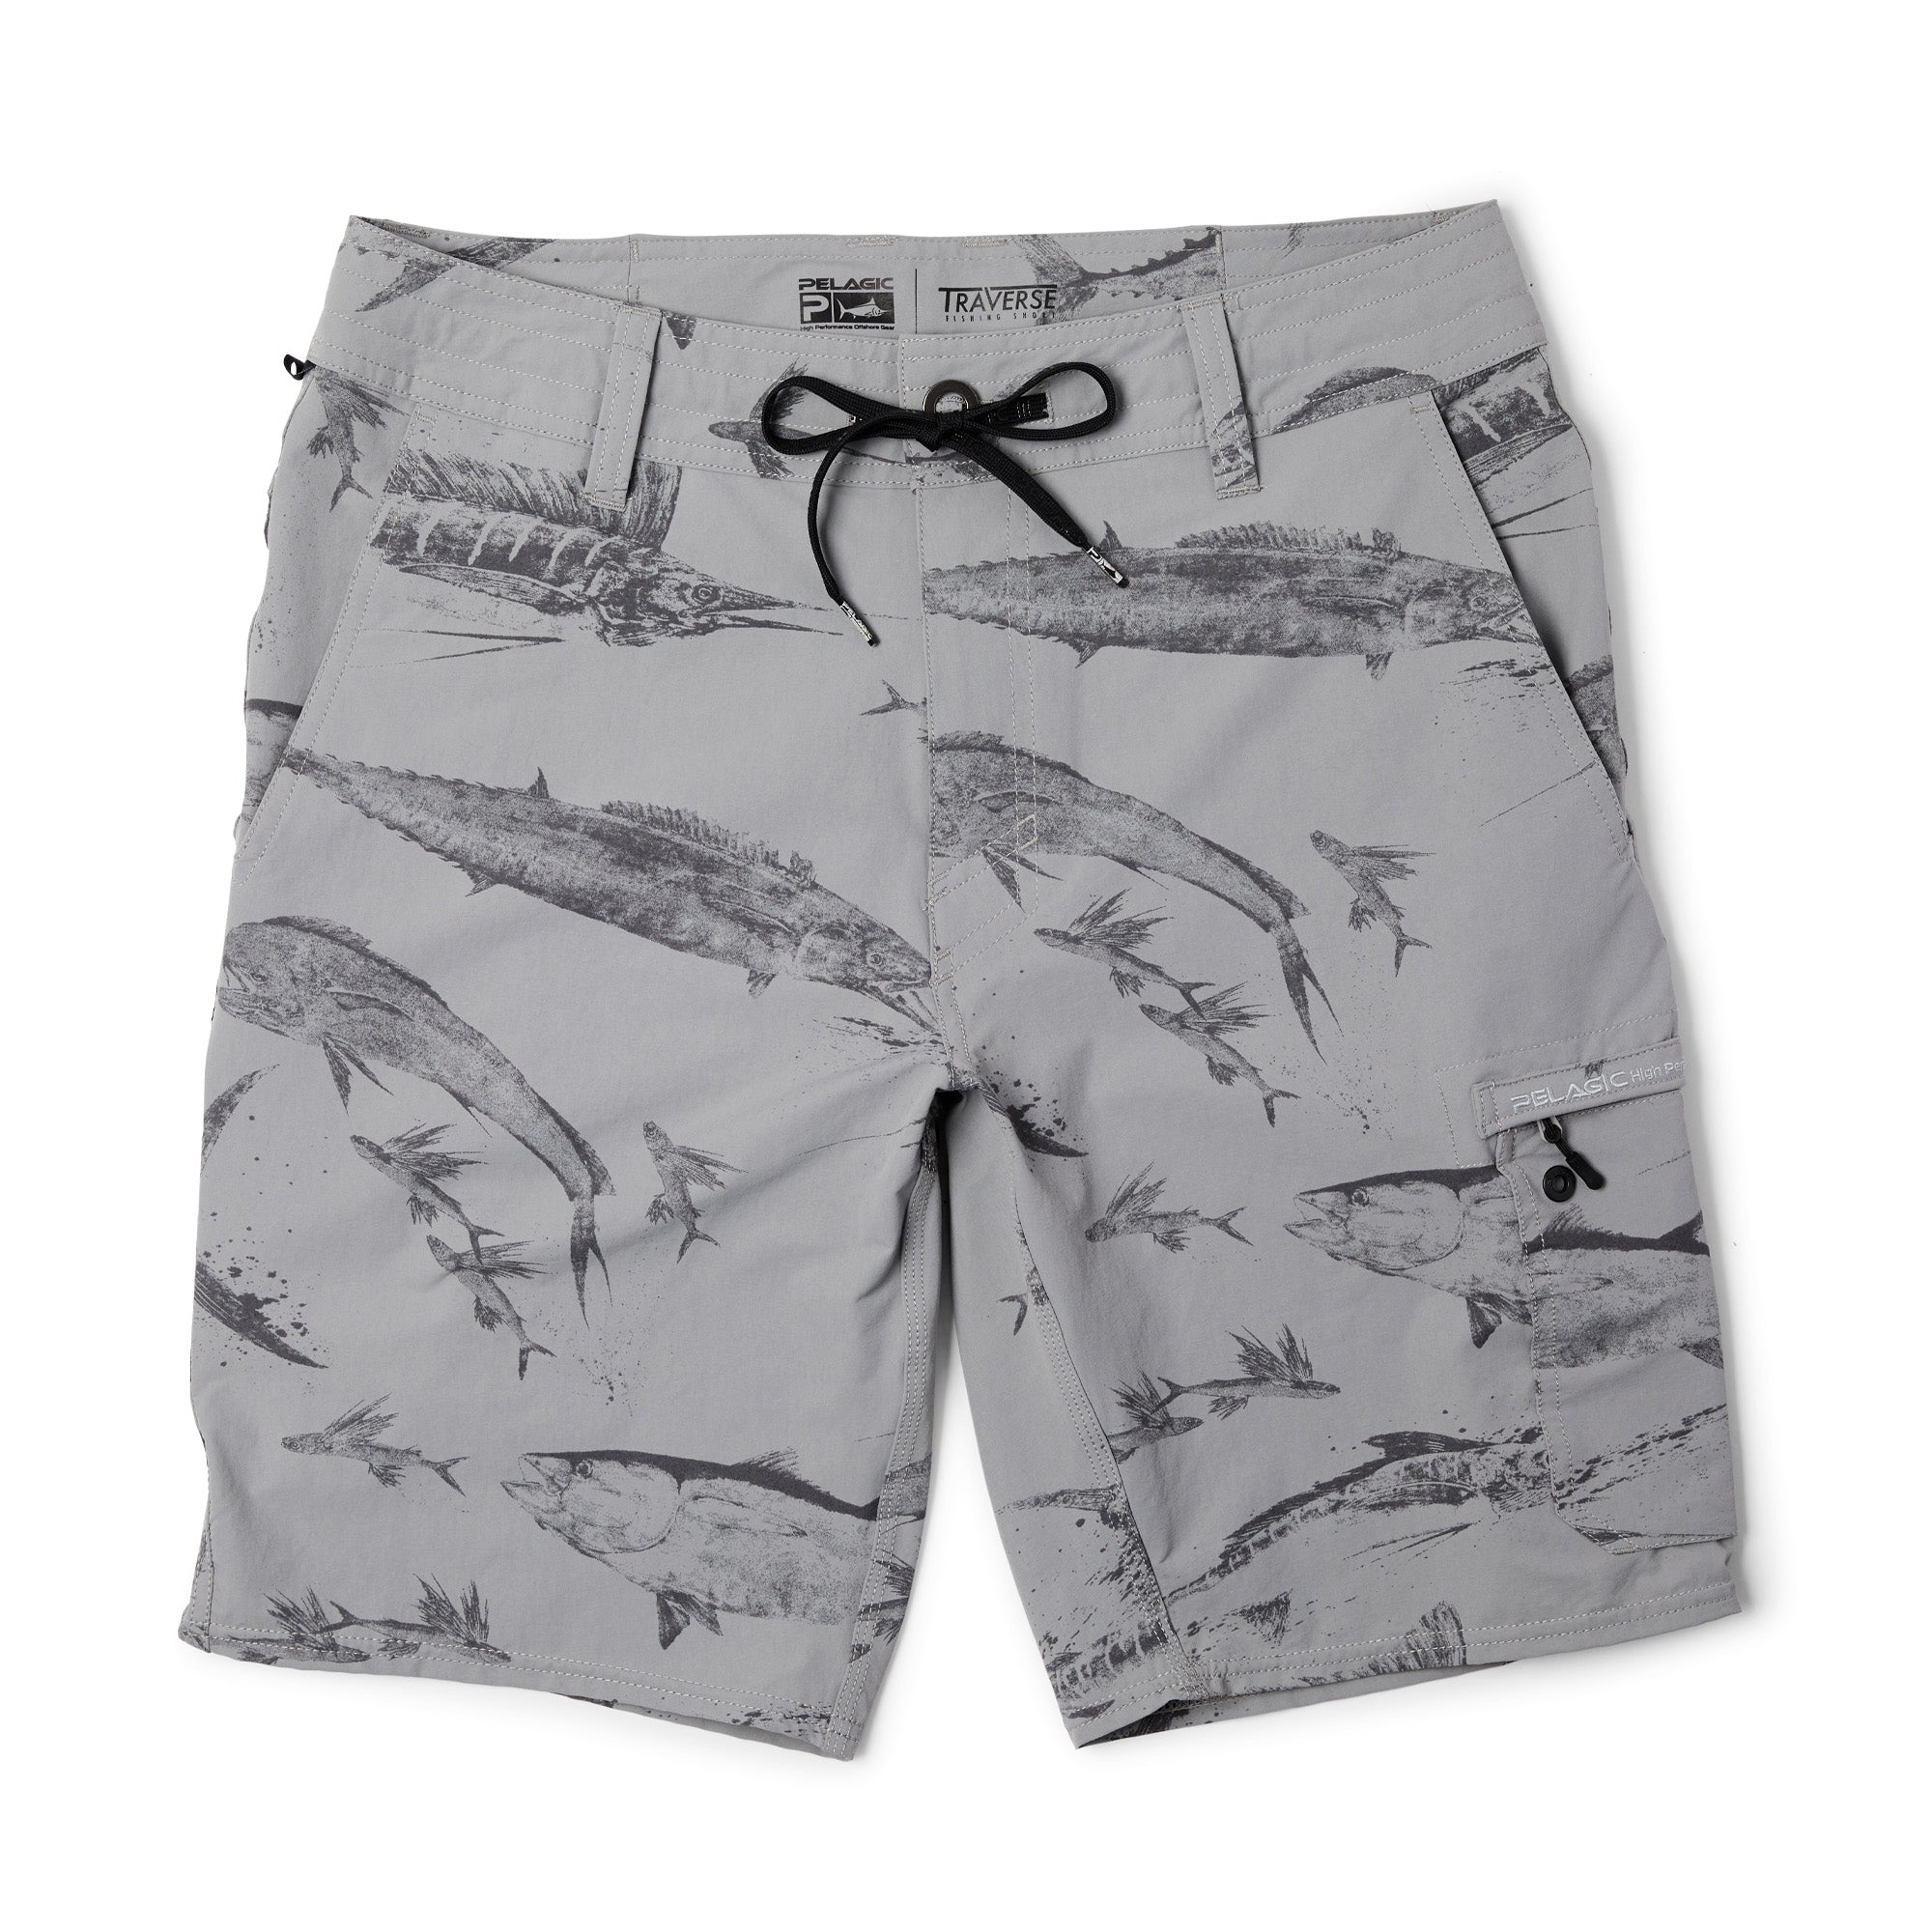 Pelagic Deep Drop Fishing Shorts (Men's)